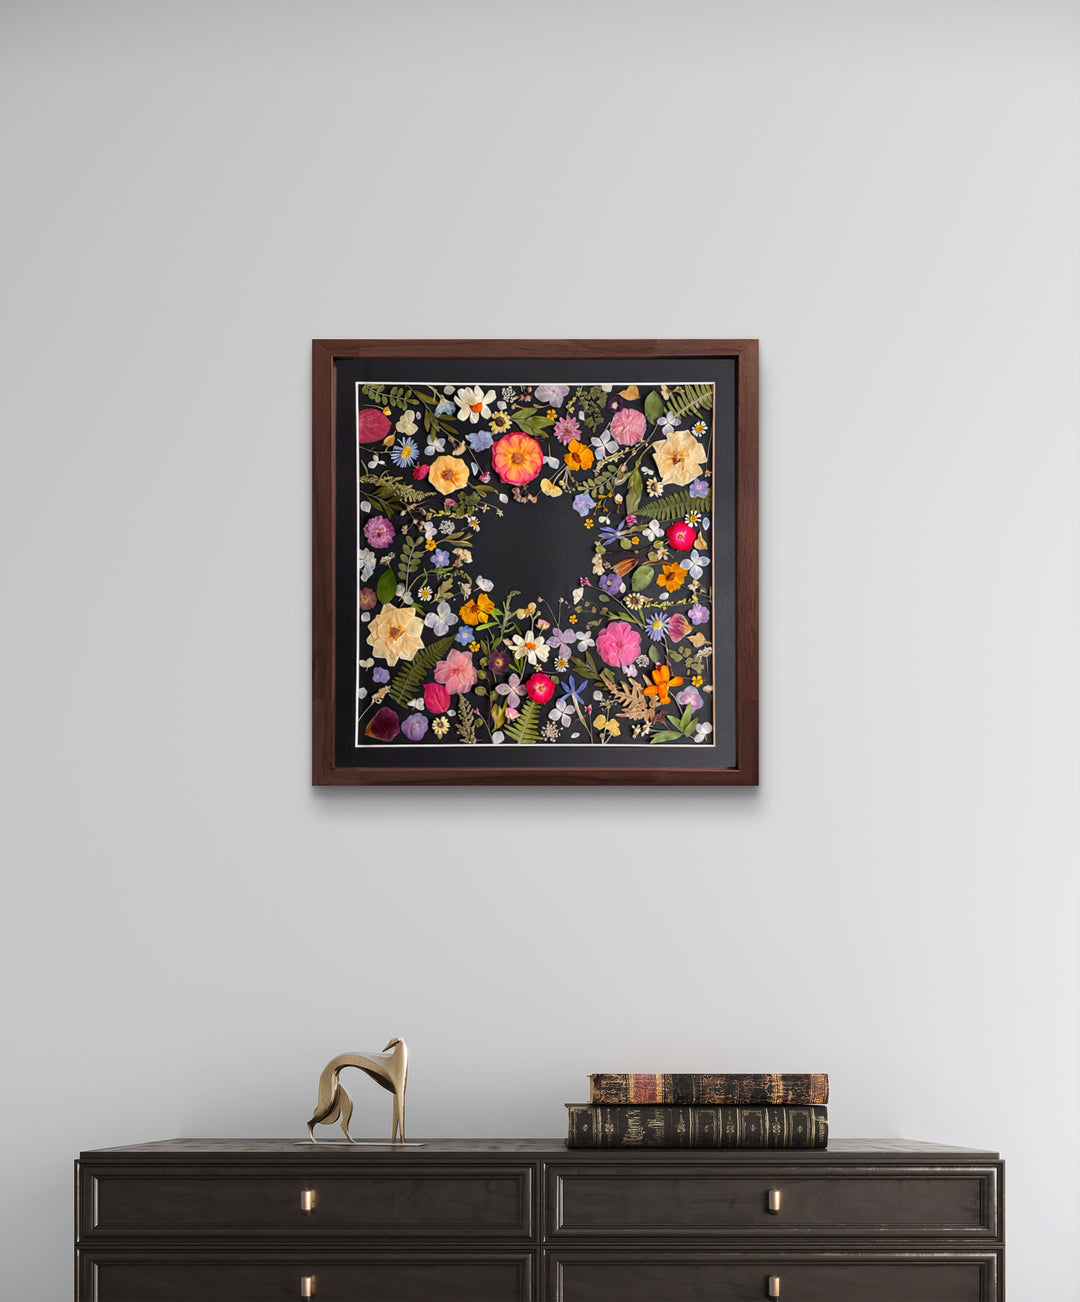 black background pressed flower frame art with flower petals hanging on the living room wall above black desk